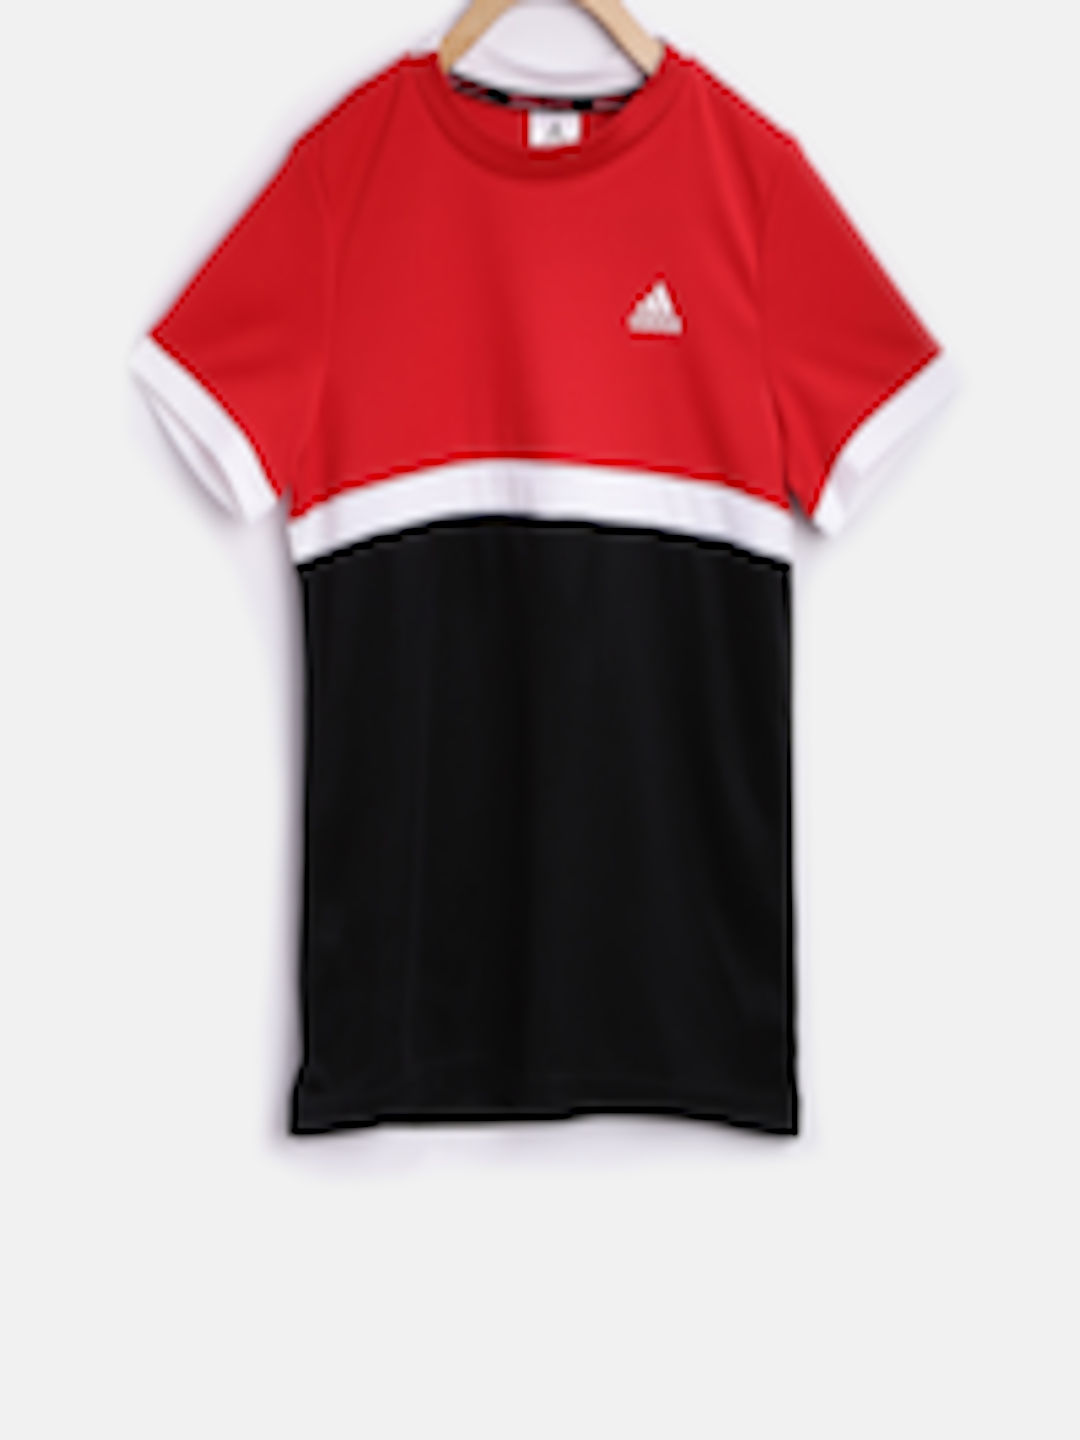 Buy ADIDAS Boys Red & Black Colourblocked Round Neck T Shirt - Tshirts ...